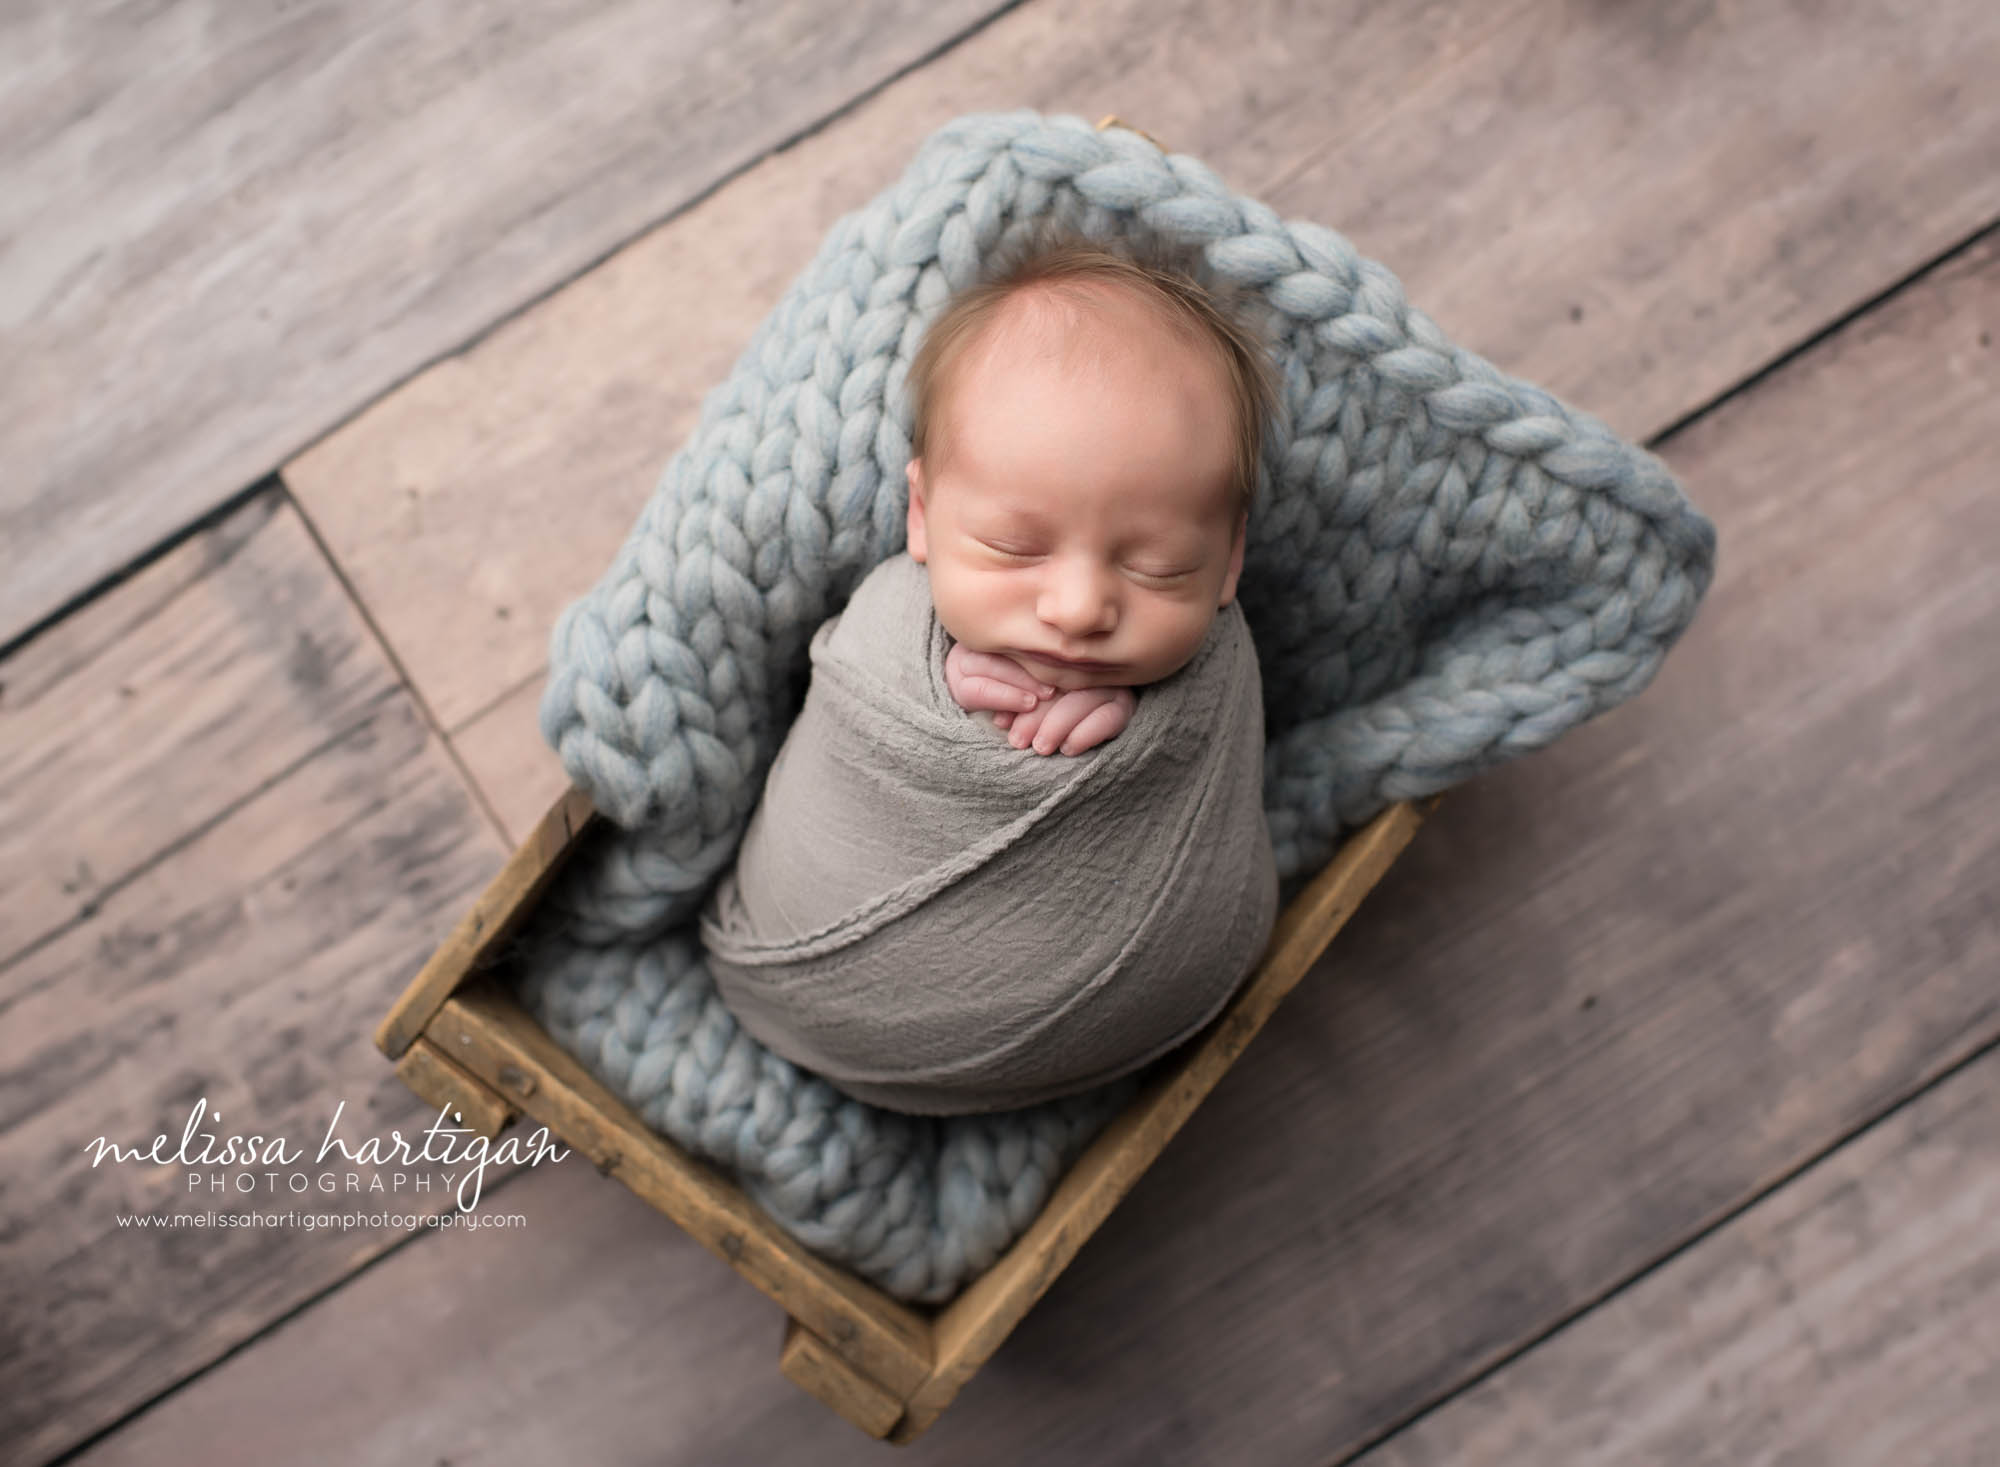 Newborn Photographer Connecticut newborn pose baby sleeping in wooden crate in gray wrap